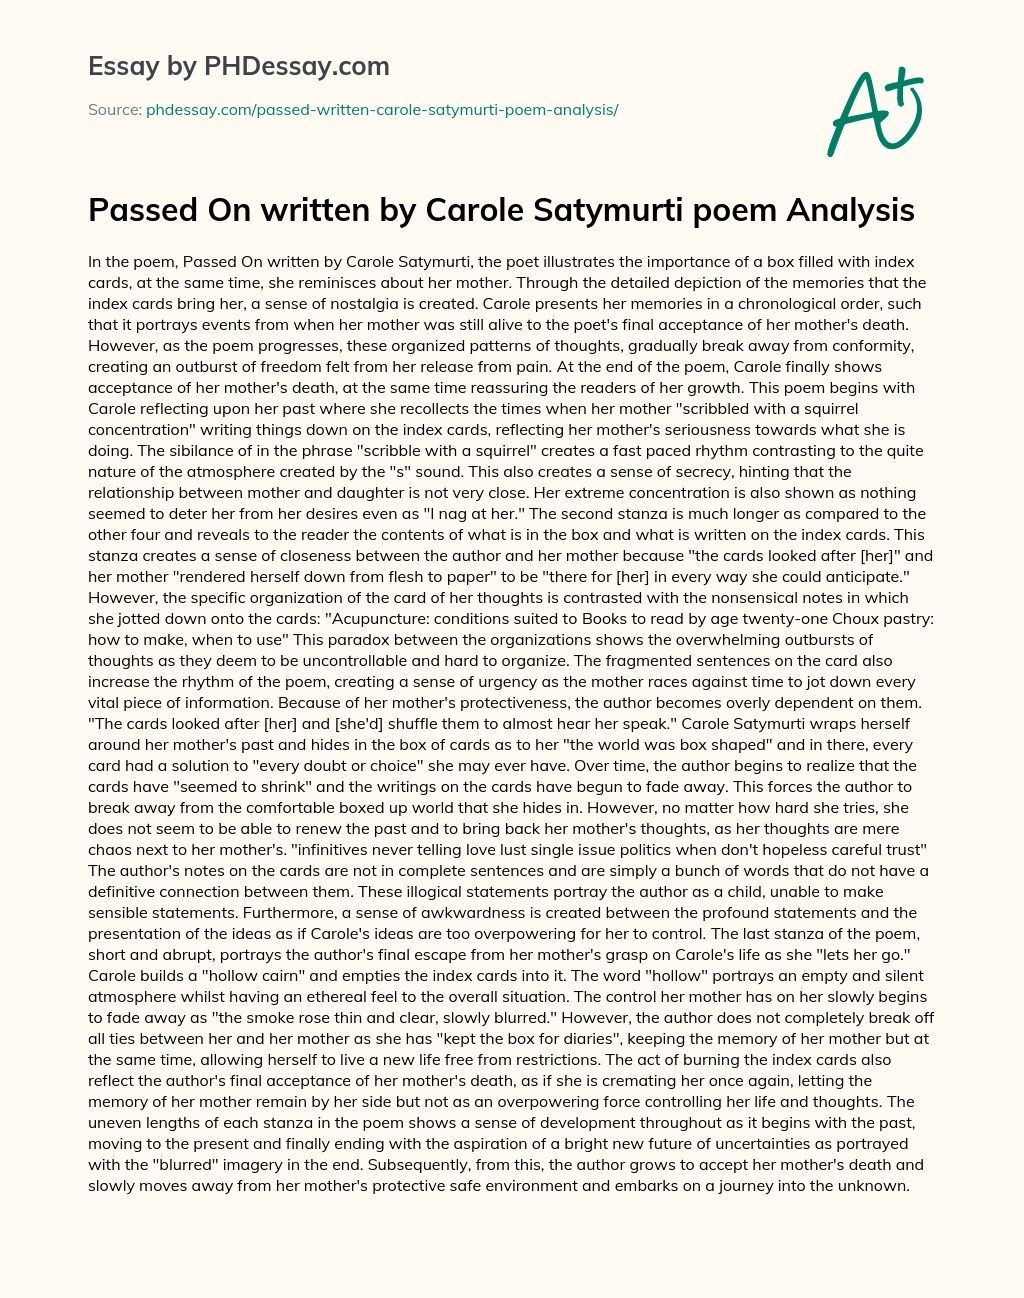 Passed On written by Carole Satymurti poem Analysis essay